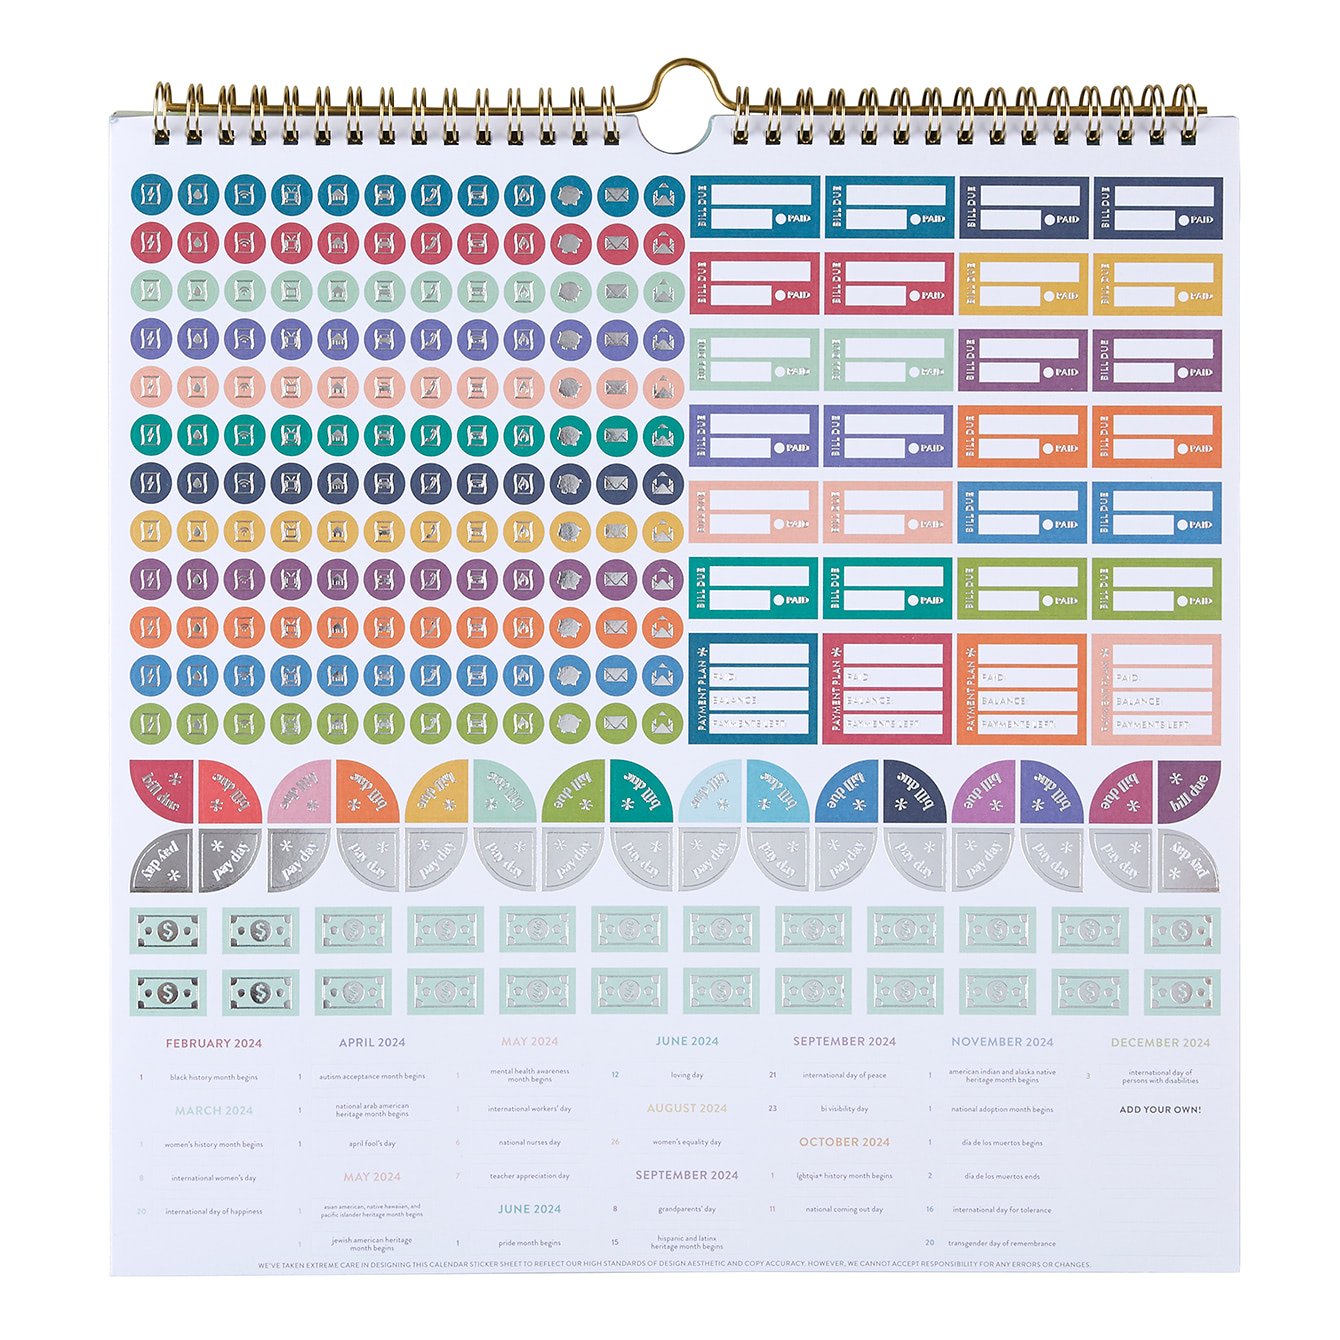 Monthly Bill Tracker Printable Floral, Bill Payment Tracker, Bill Calendar, Bill  Organizer, Expense Tracker, Monthly Budget Planner PDF -  Canada